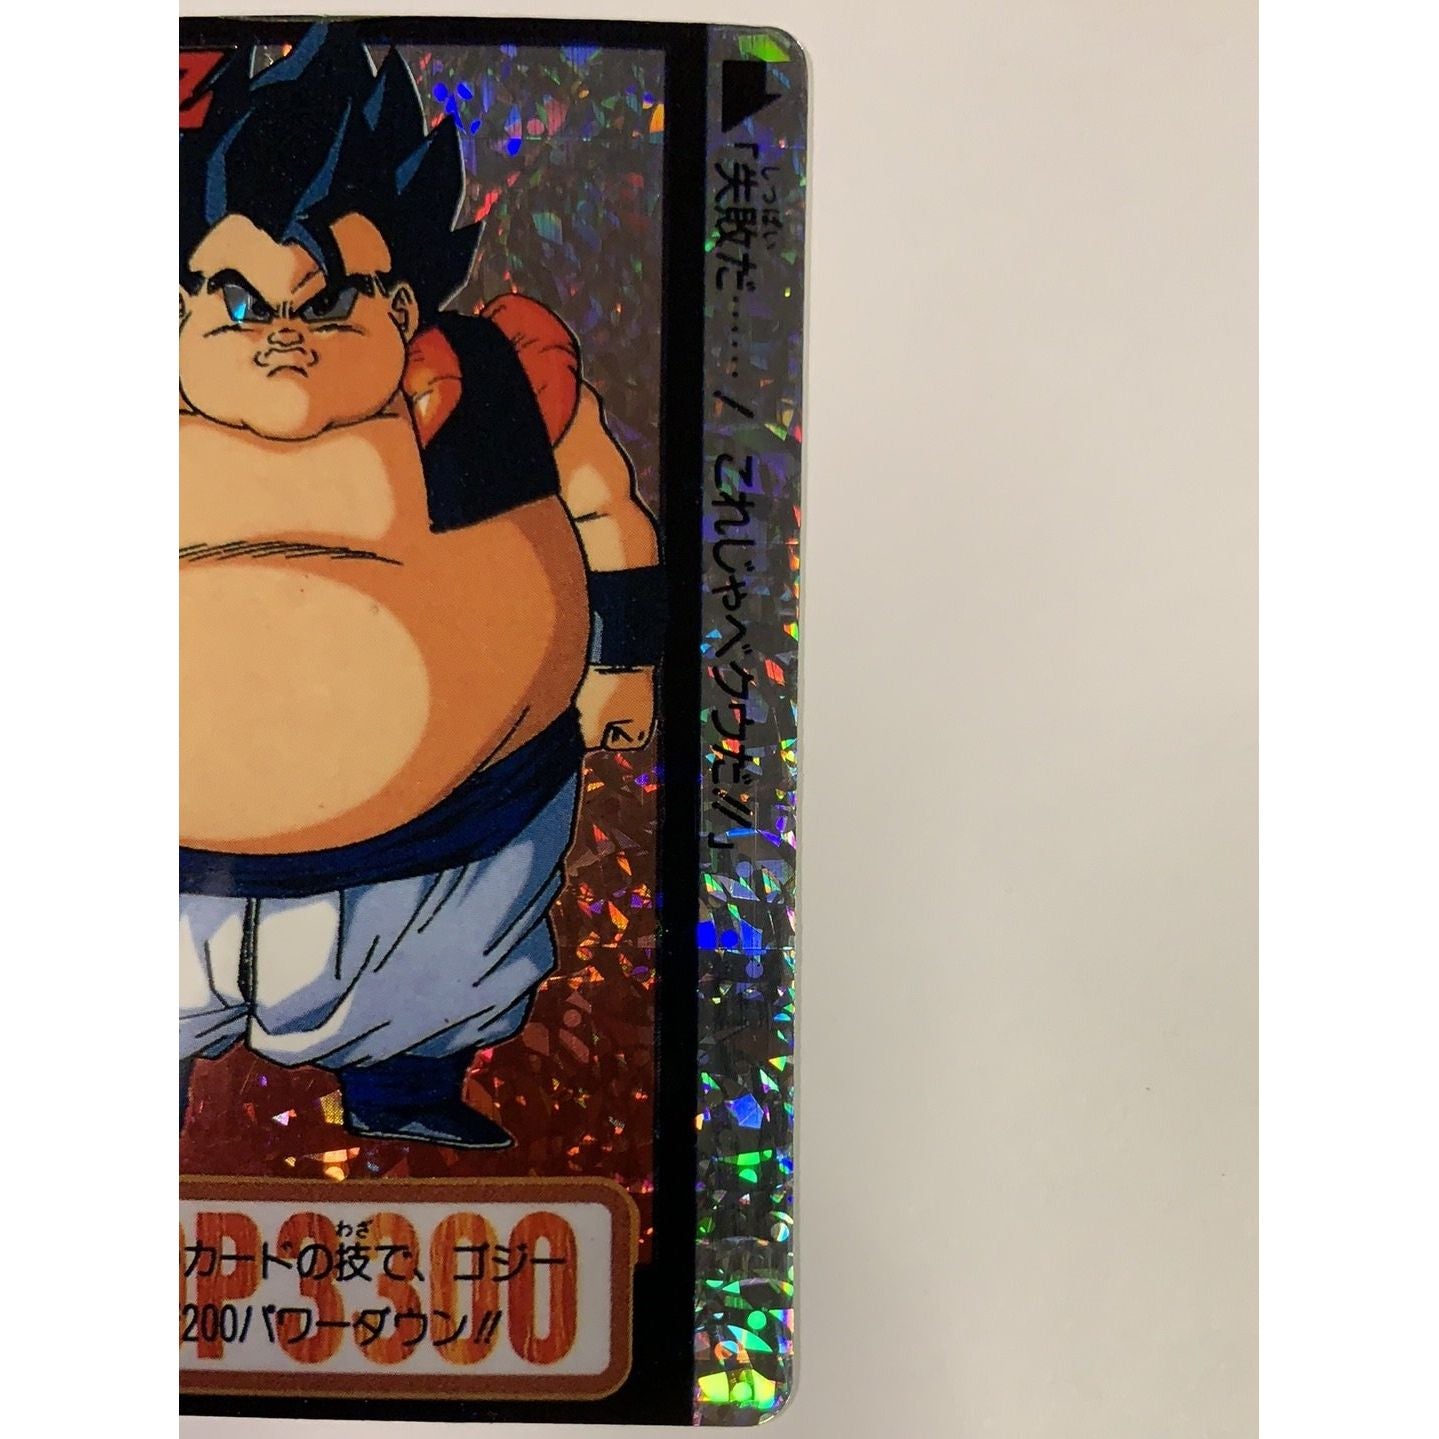  1995 Cardass Hondan Dragon Ball Z #891 Japanese Vending Machine Prism Sticker  Local Legends Cards & Collectibles